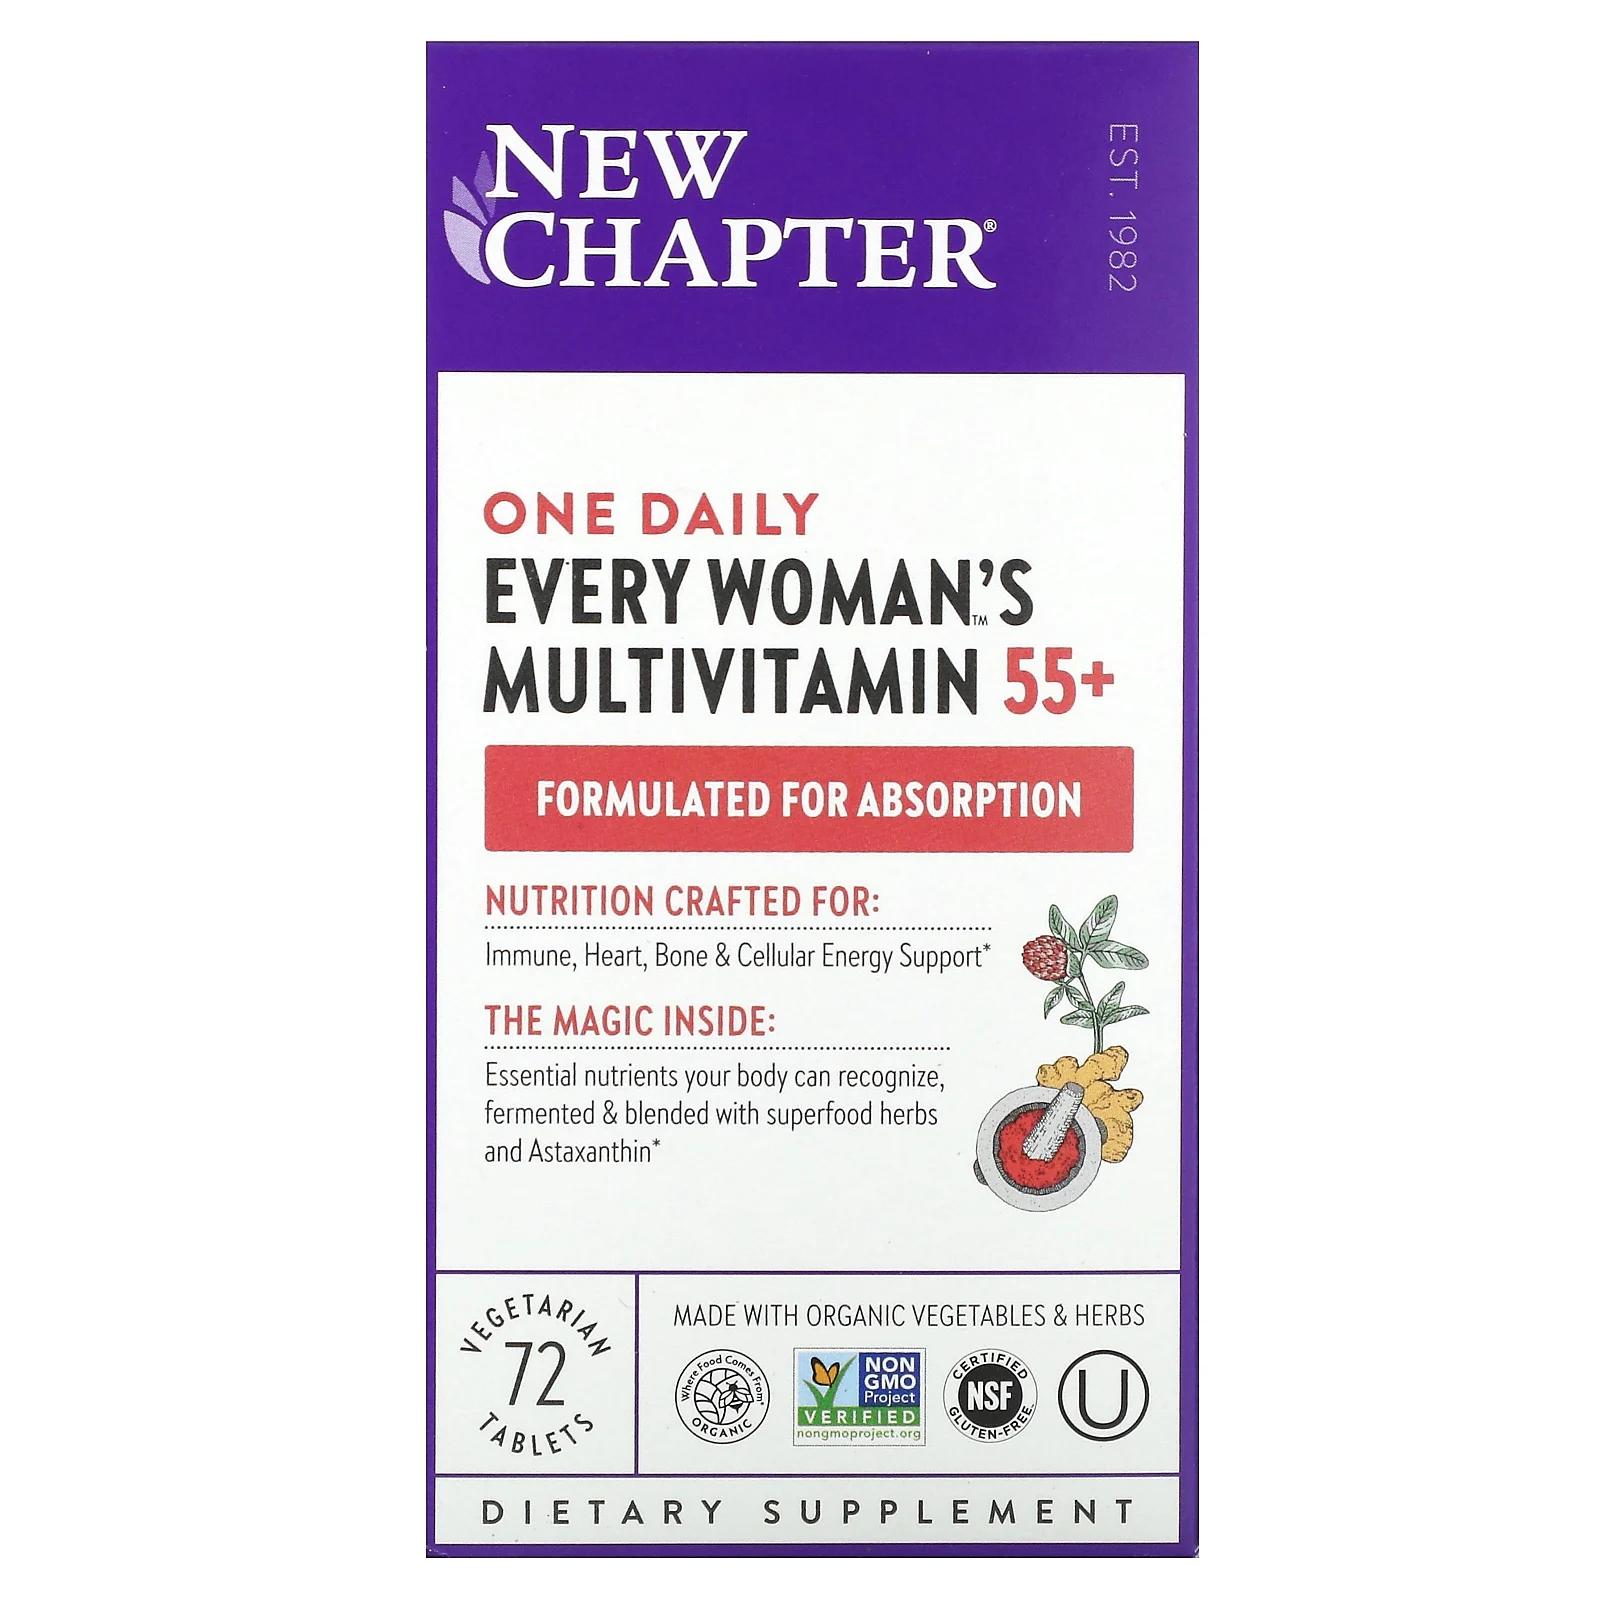 New Chapter Every Woman's One Daily 55+ Multi 72 Veggie Tabs new chapter every man s one daily мультивитамины для 55 72 вегетарианские таблетки